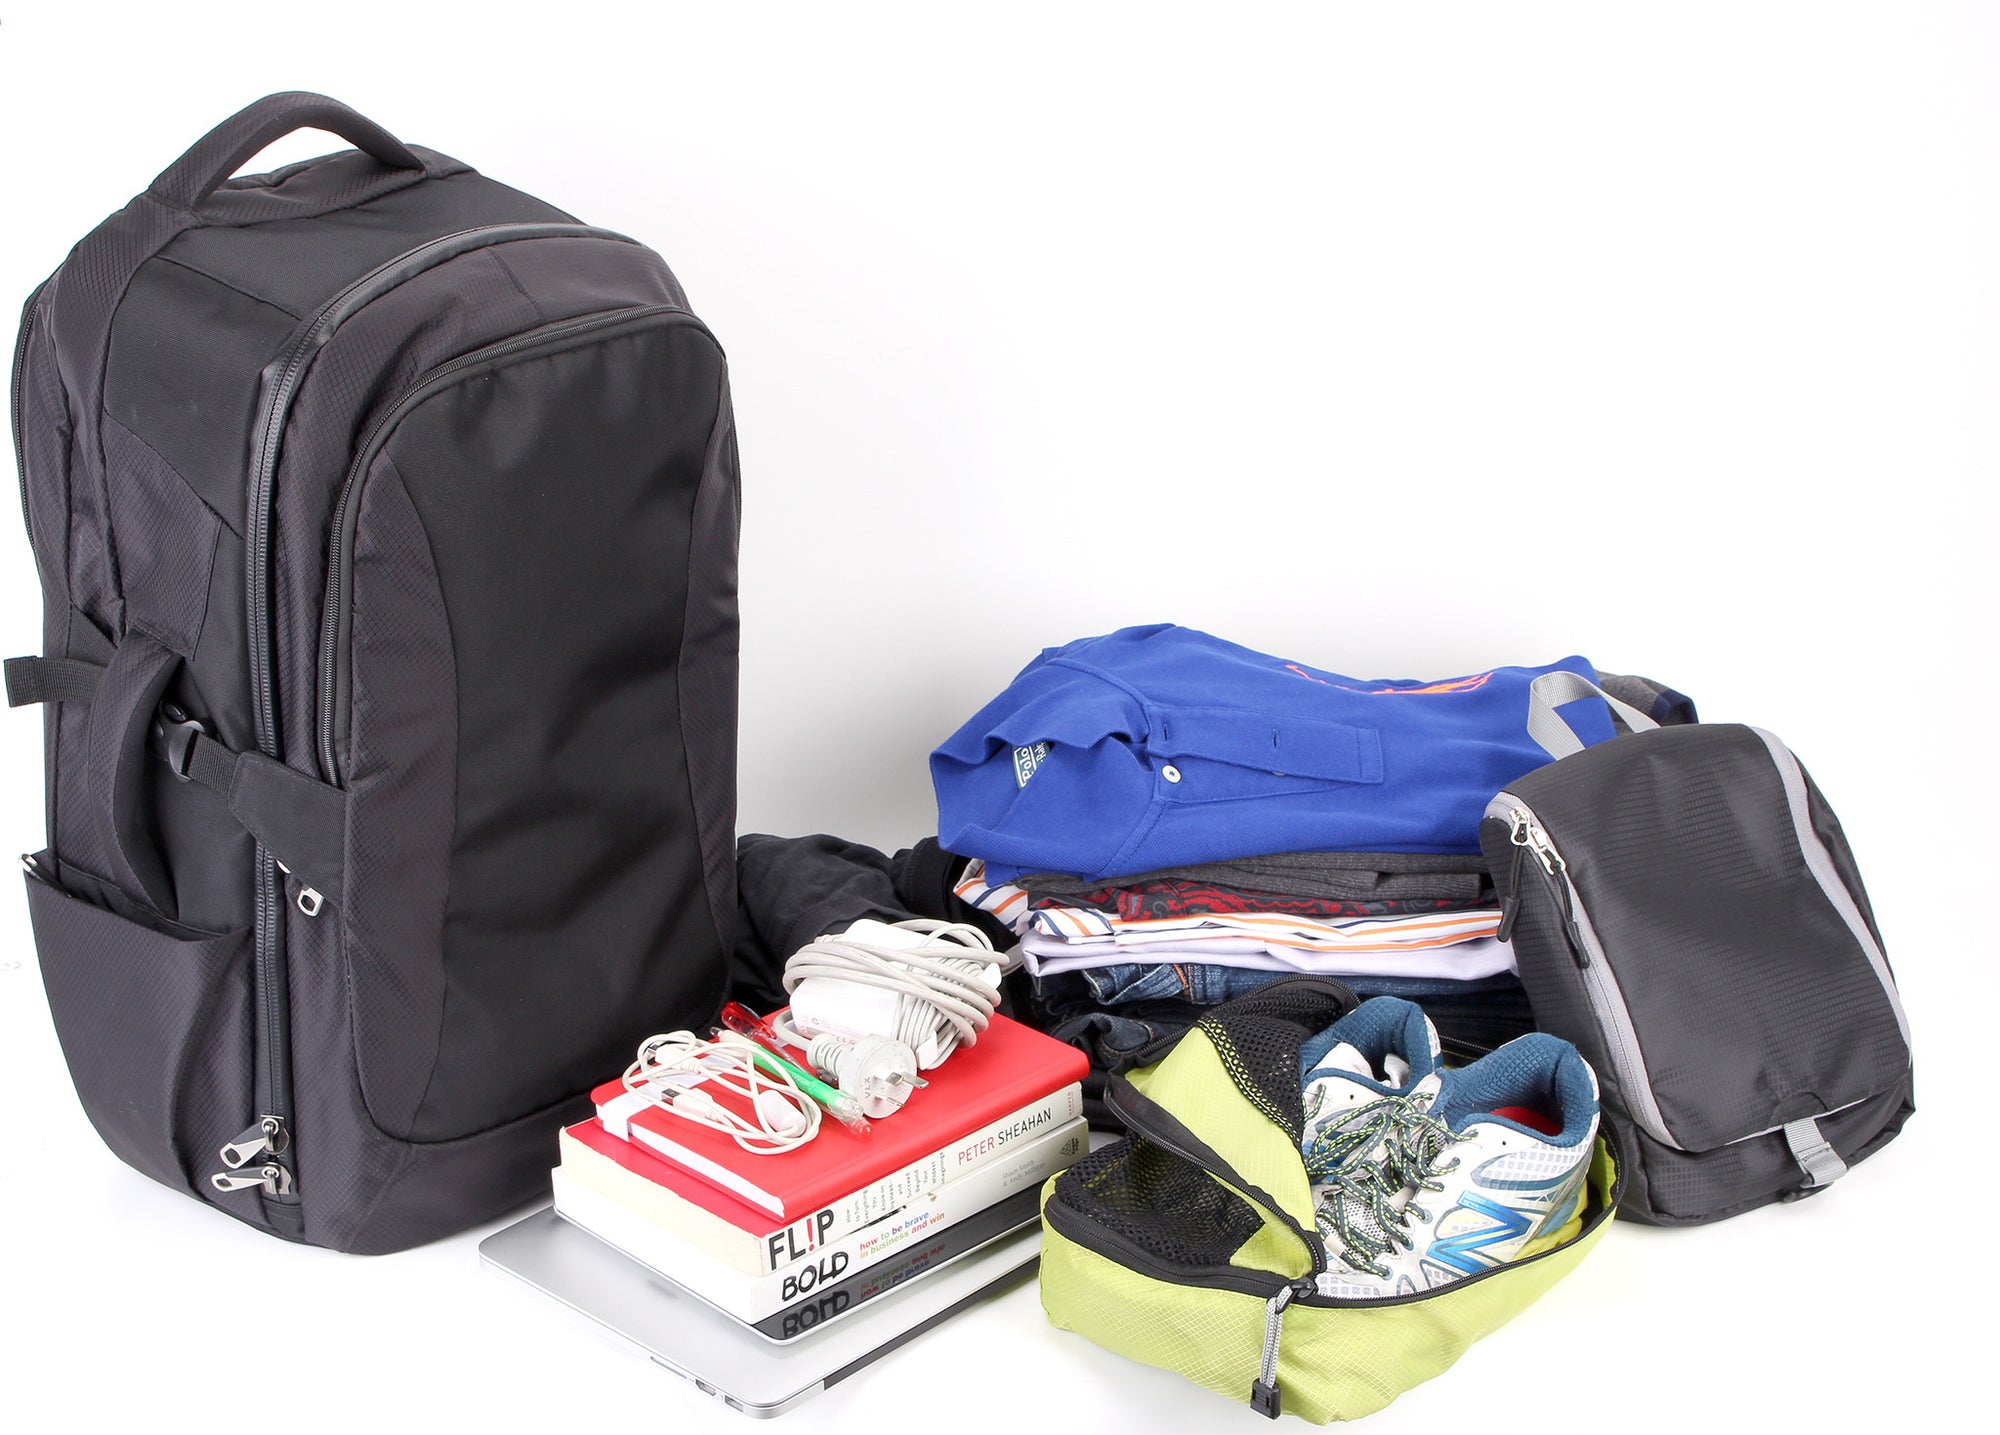 Zoomlite Road Warrior Comfortable Carryon Travel Laptop Backpack 34L